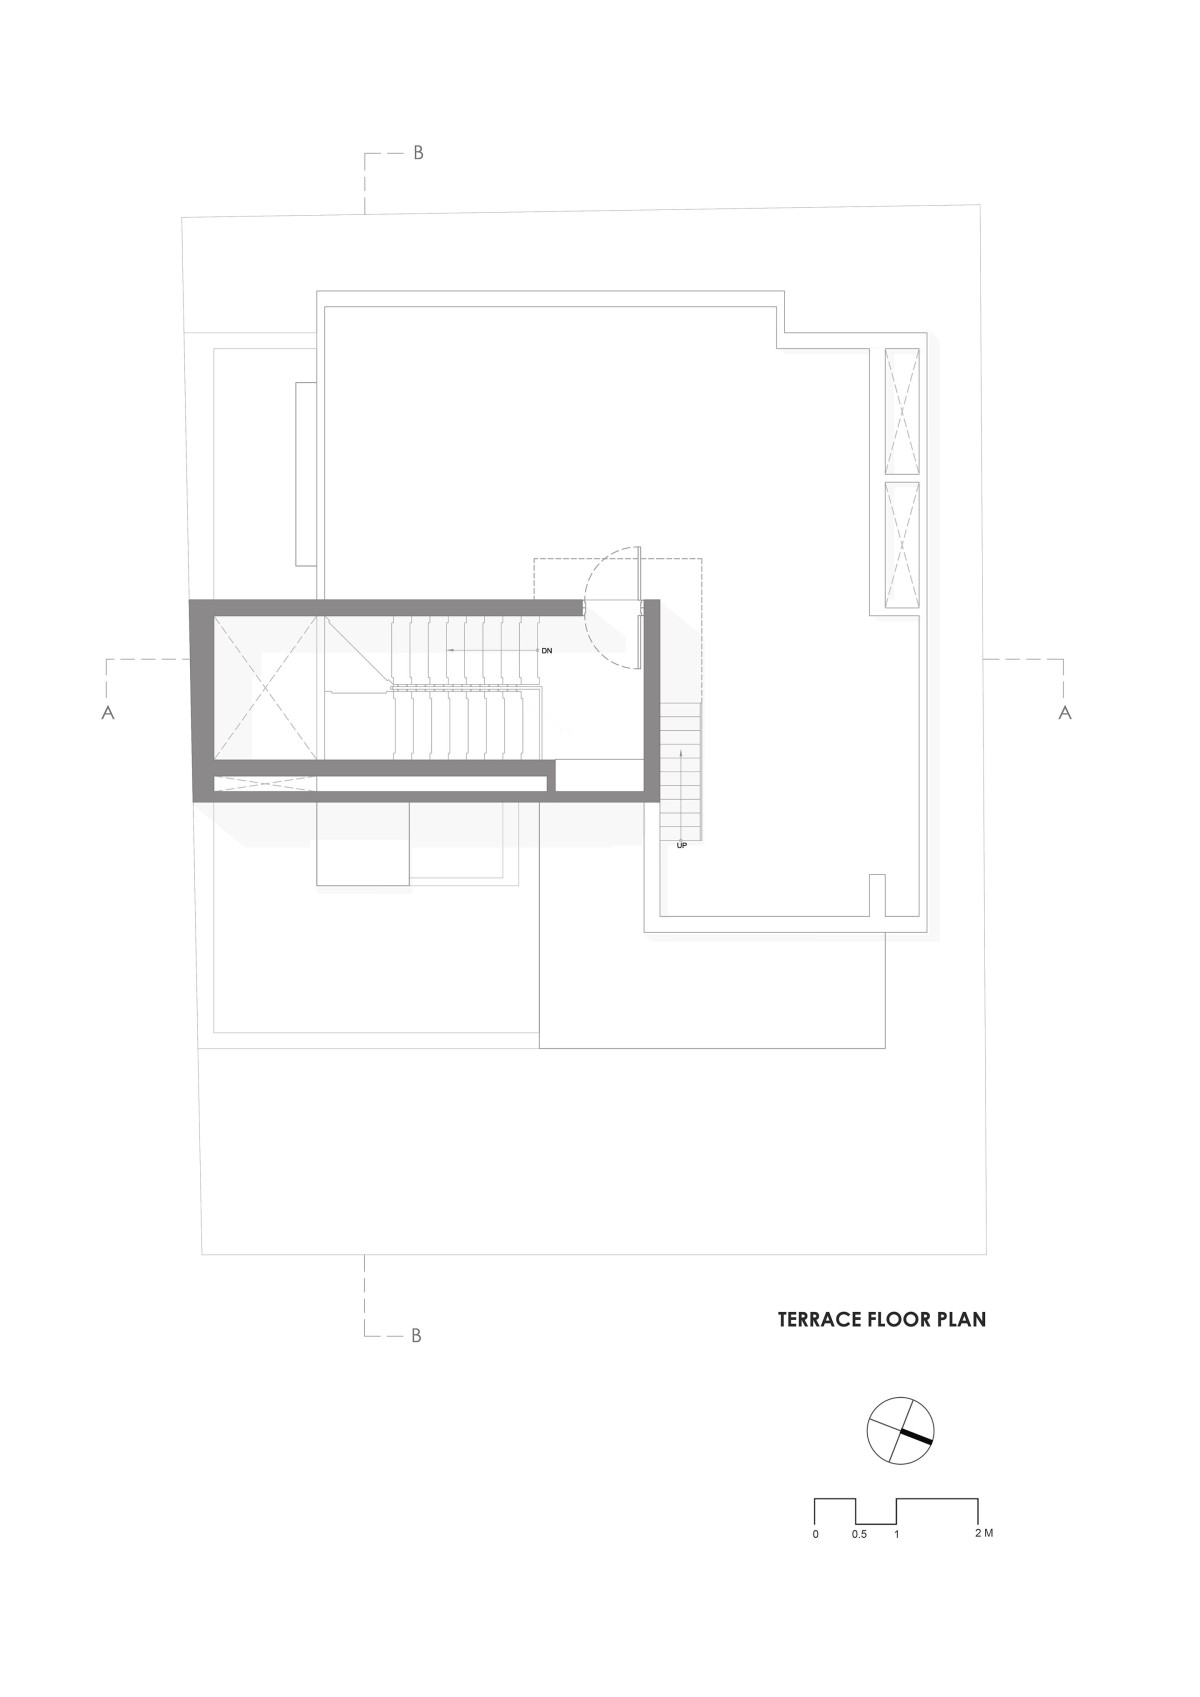 Terrace floor plan of The White Bleached House by Neogenesis+Studi0261